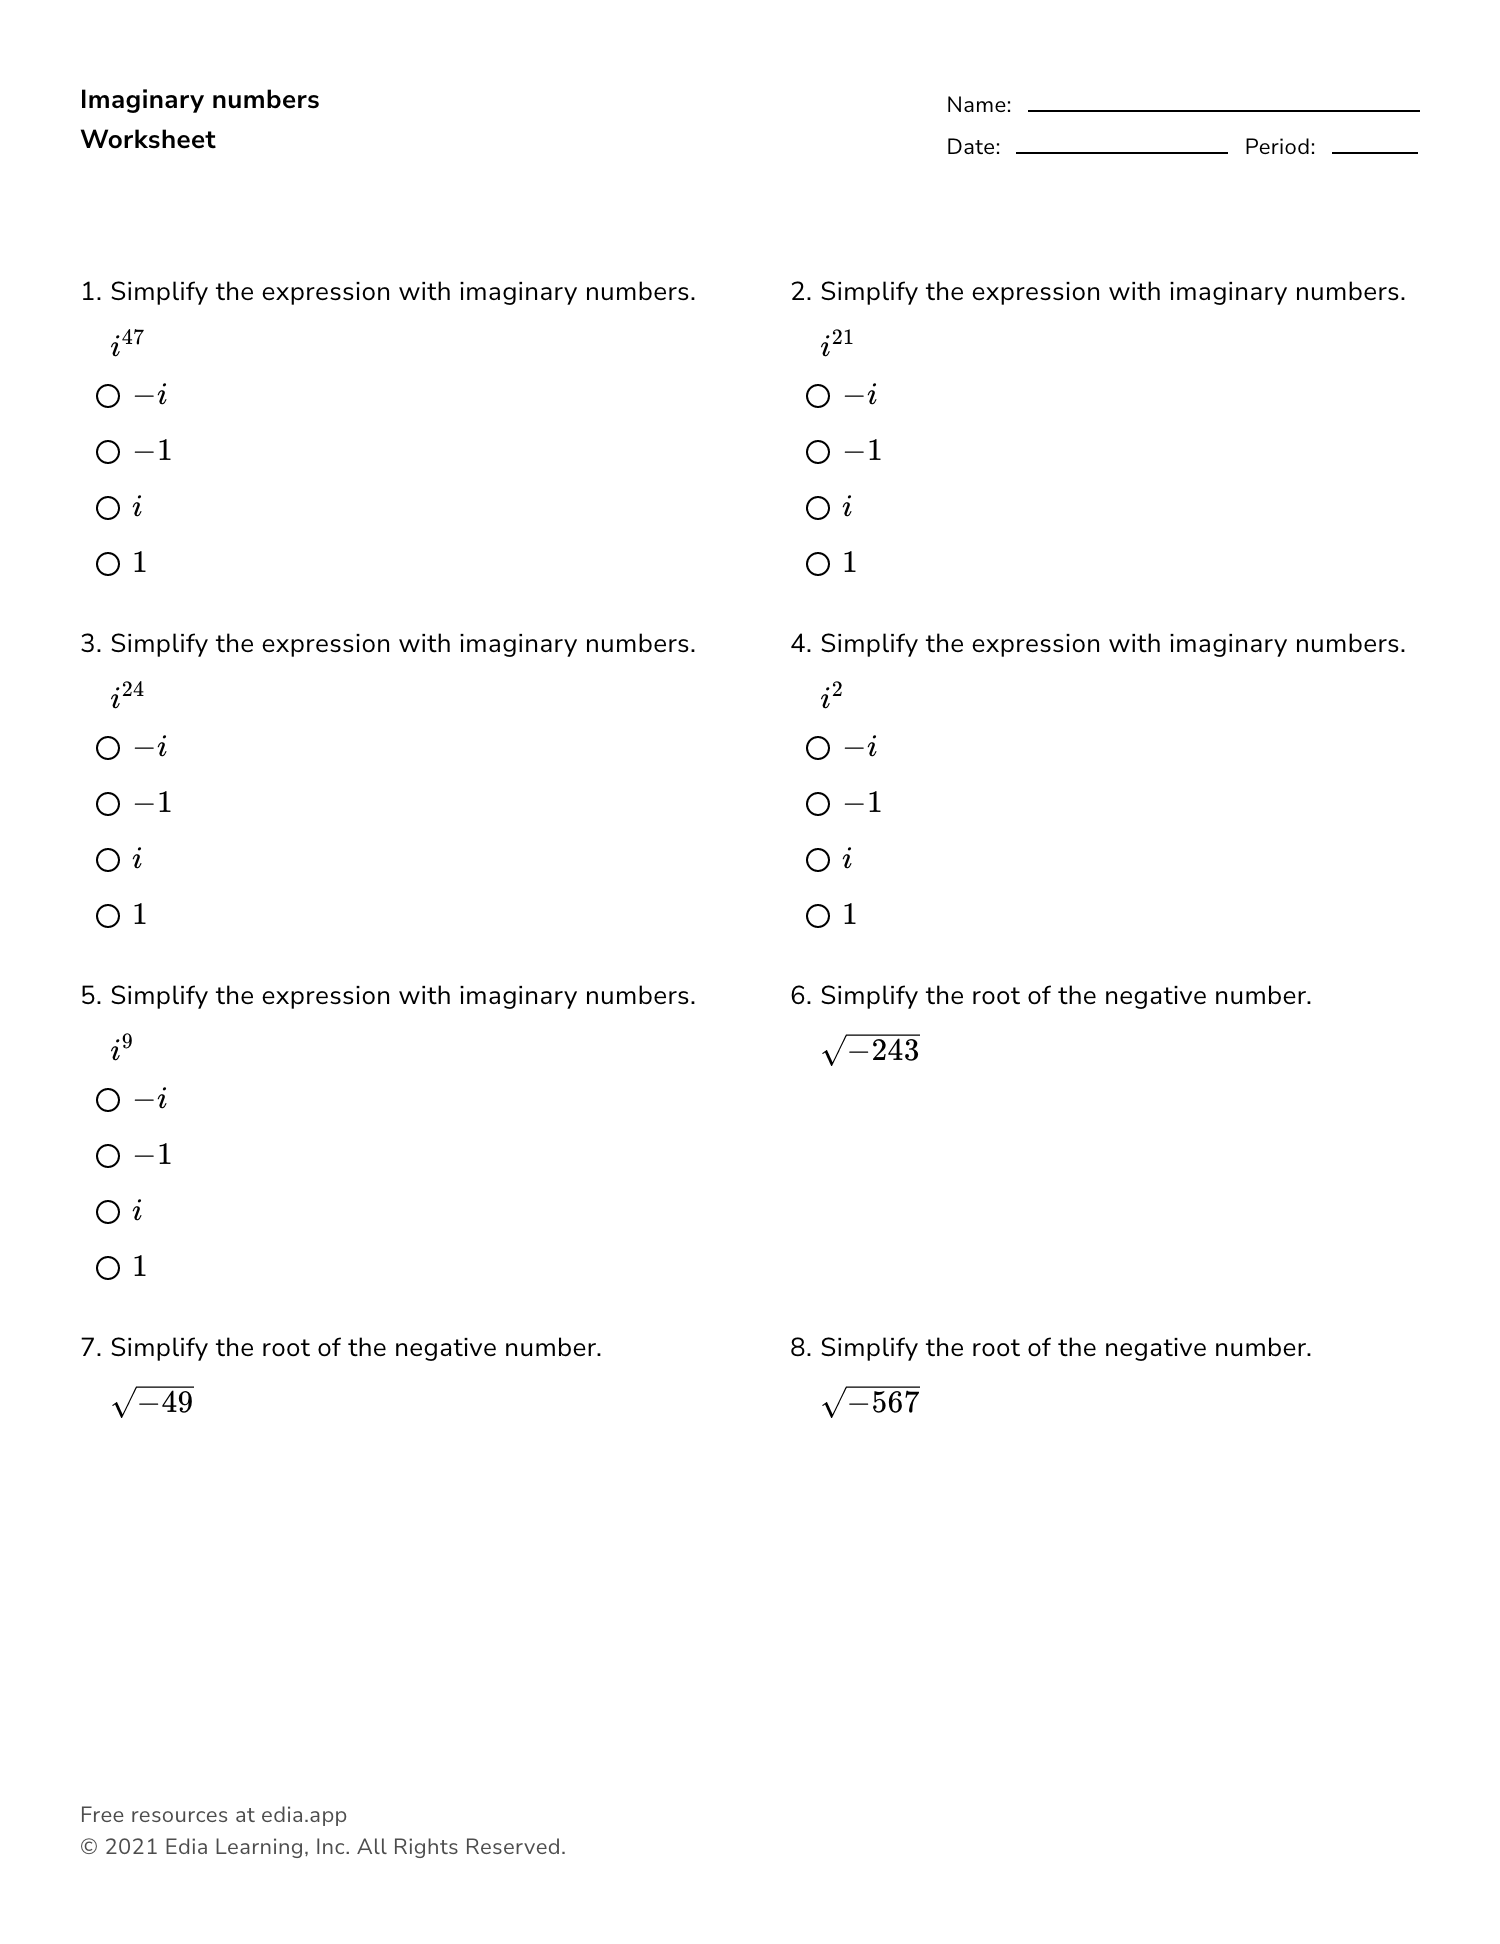 Imaginary Numbers - Worksheet Throughout Simplifying Complex Numbers Worksheet